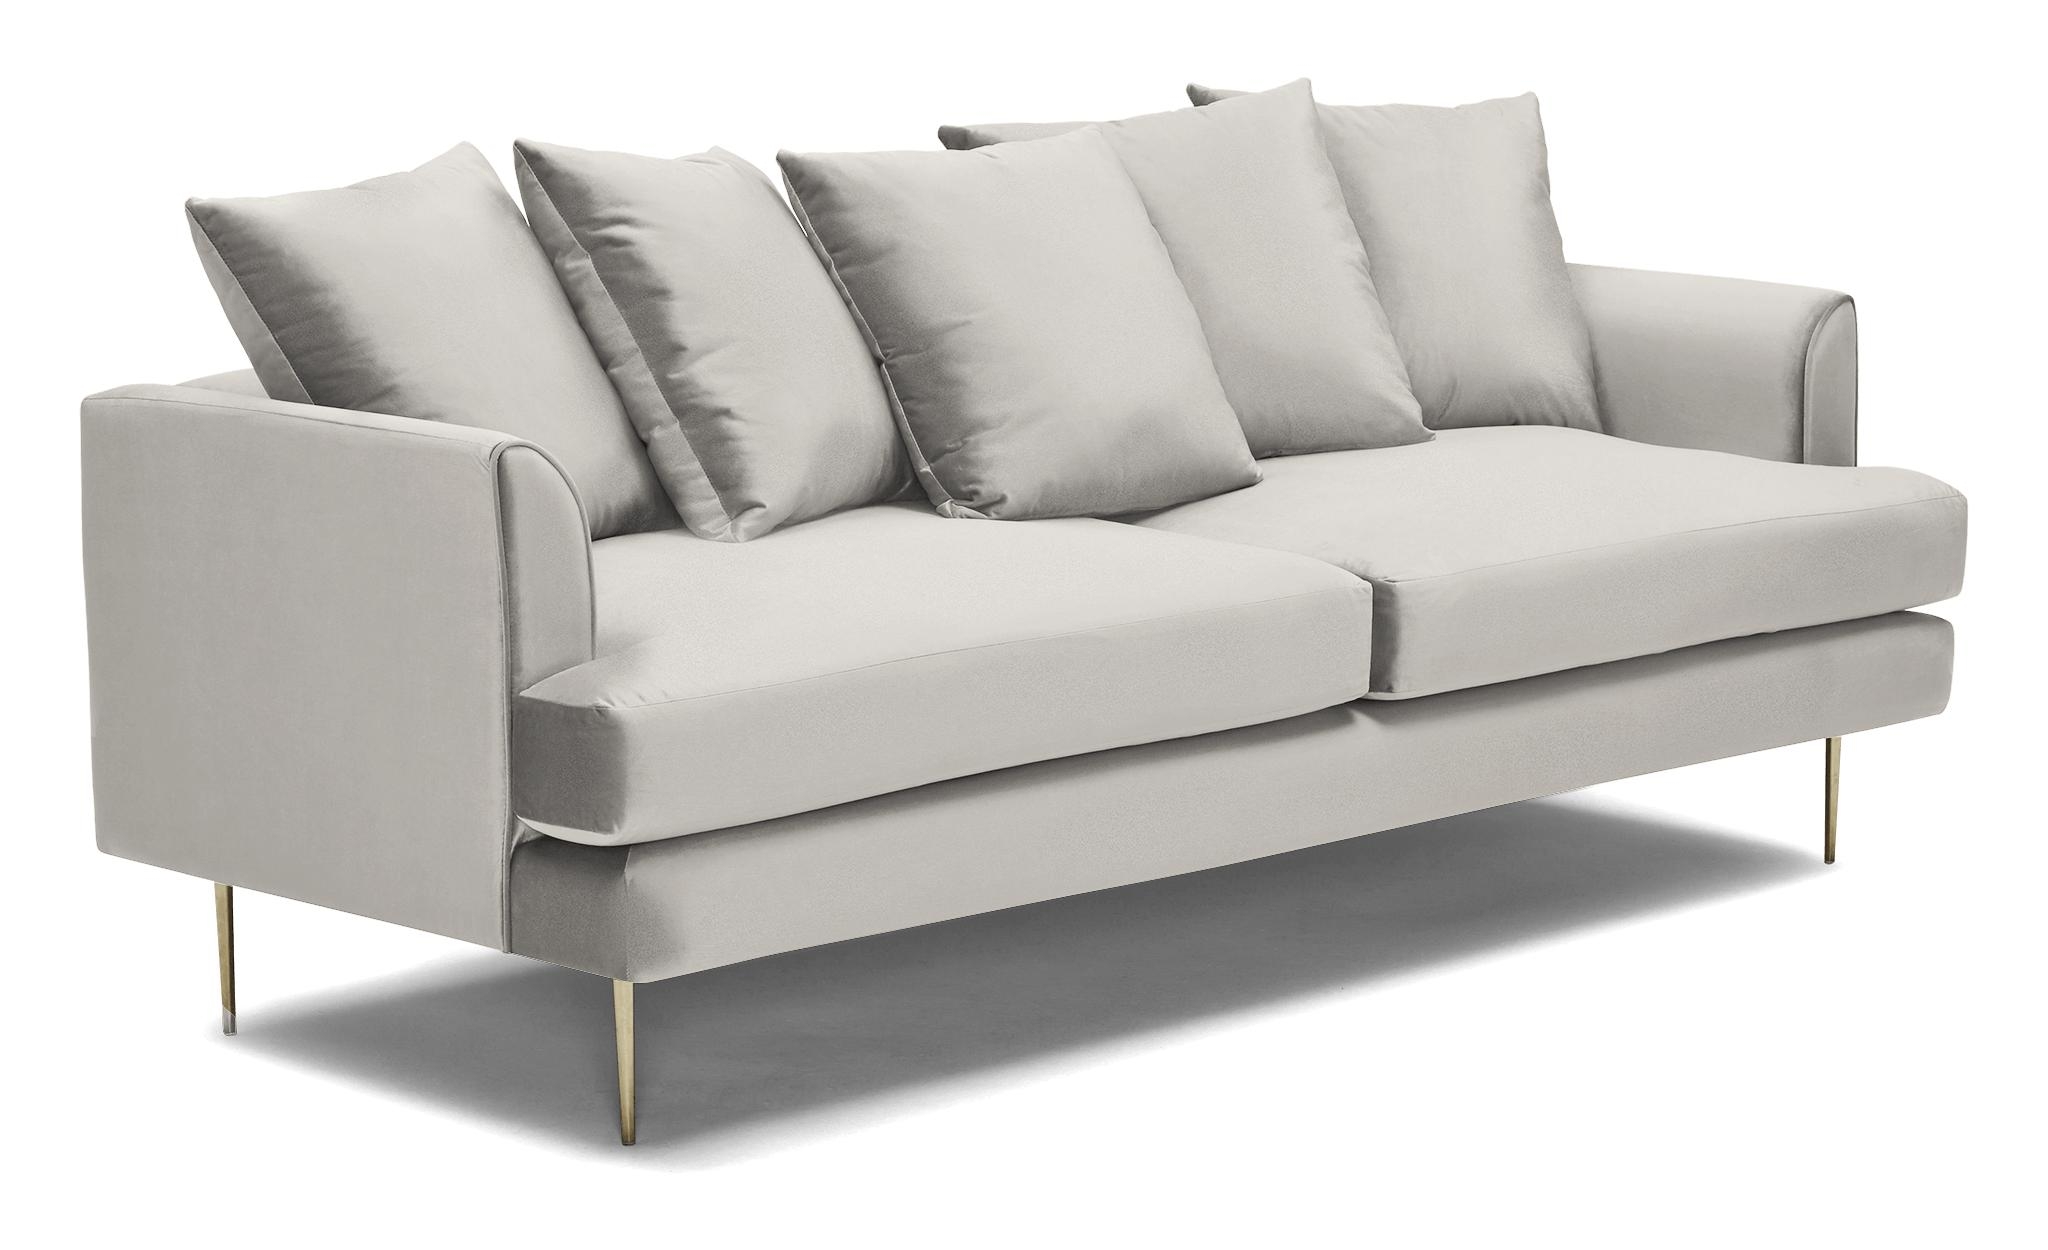 White Aime Mid Century Modern Sofa - Tussah Snow - Image 1